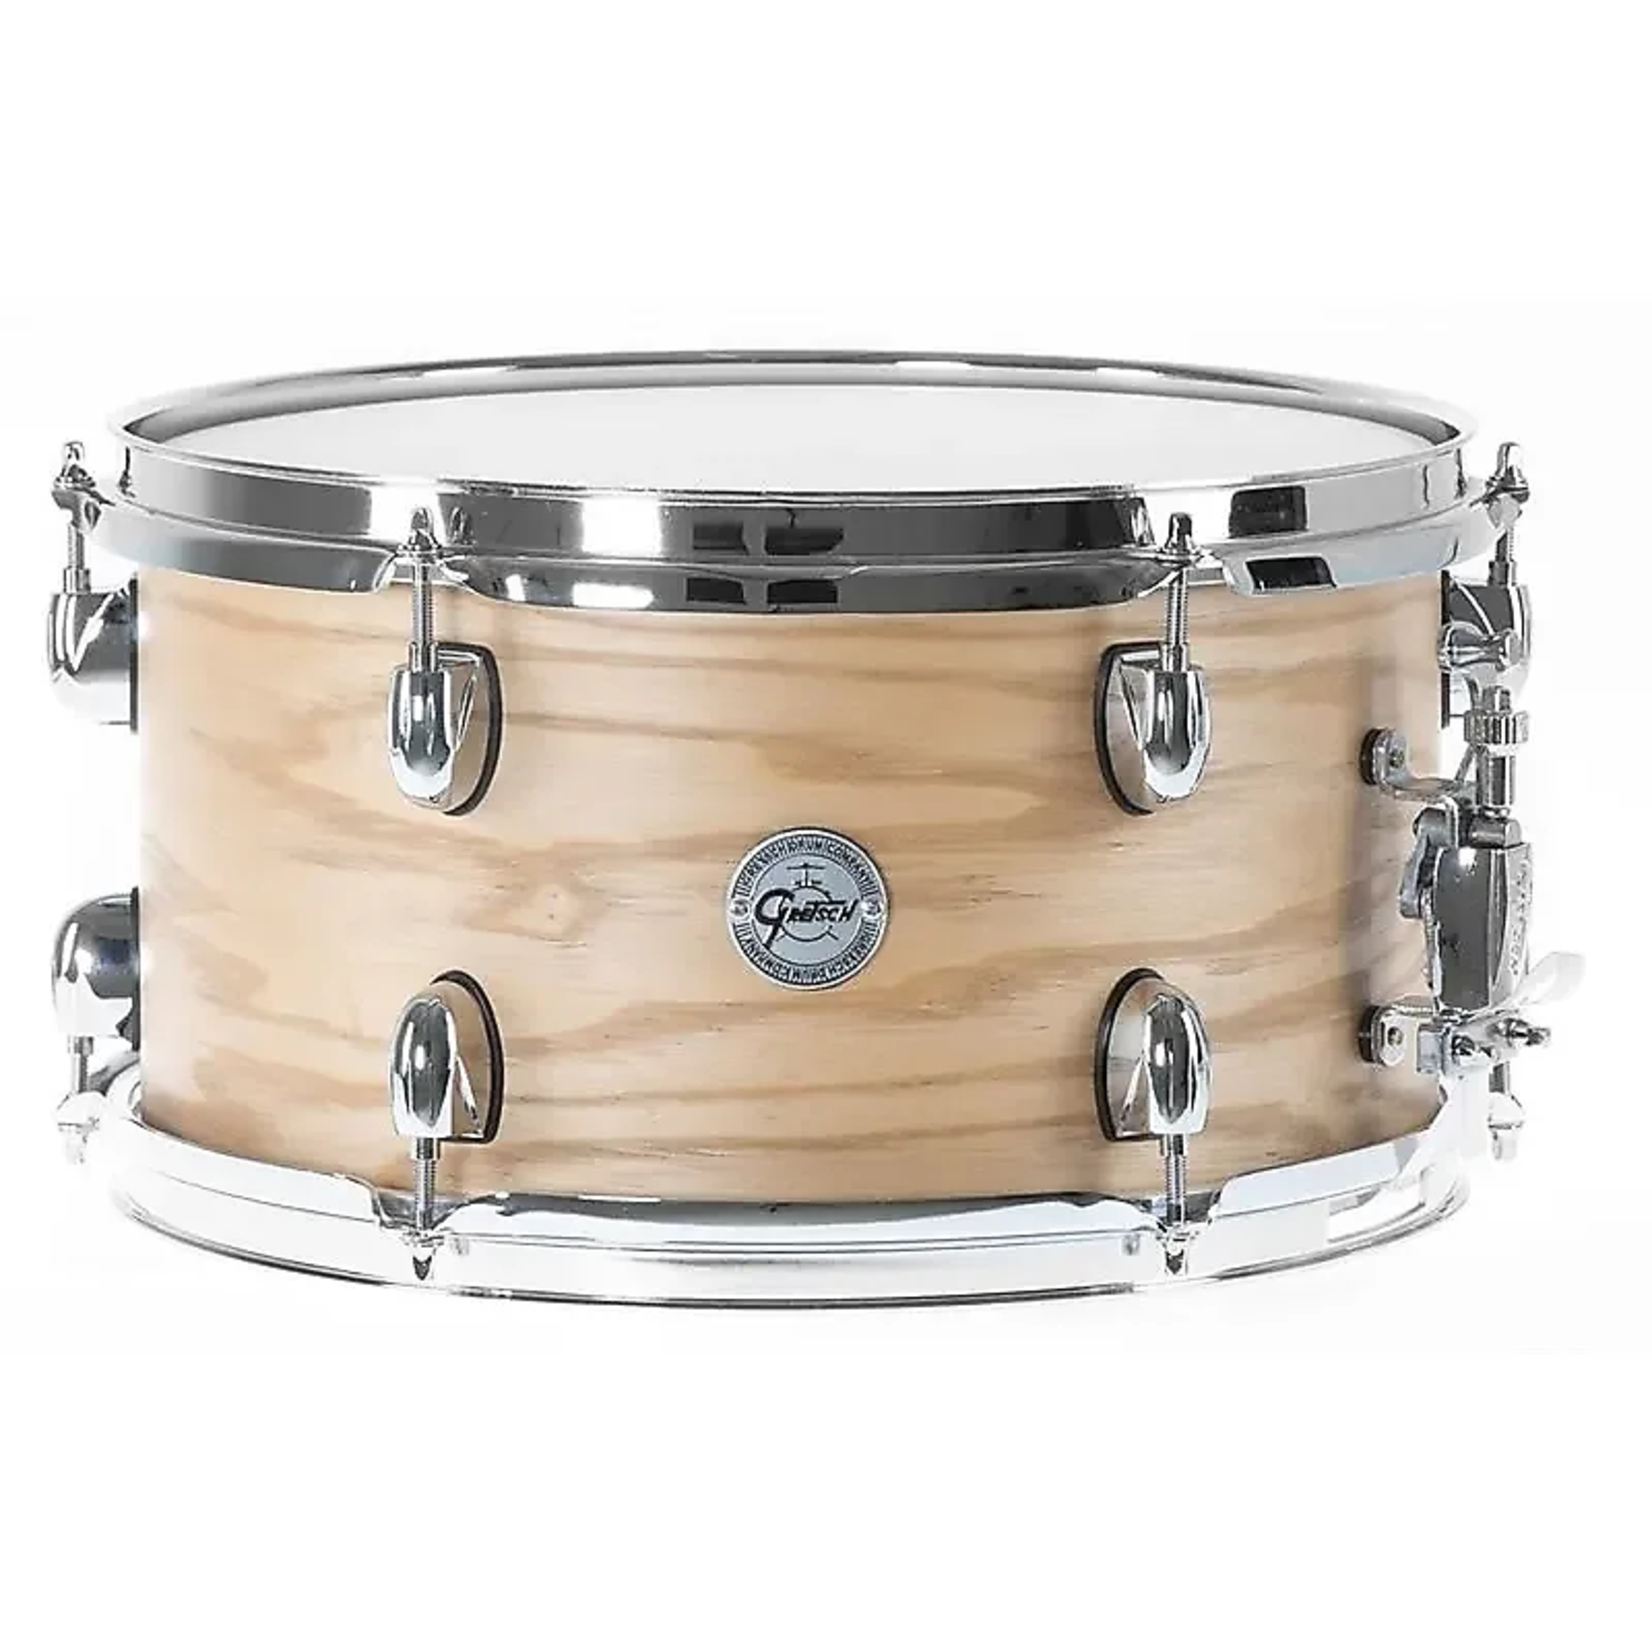 Gretsch Gretsch Full Range 7x13" Ash Snare Drum (Satin Natural)